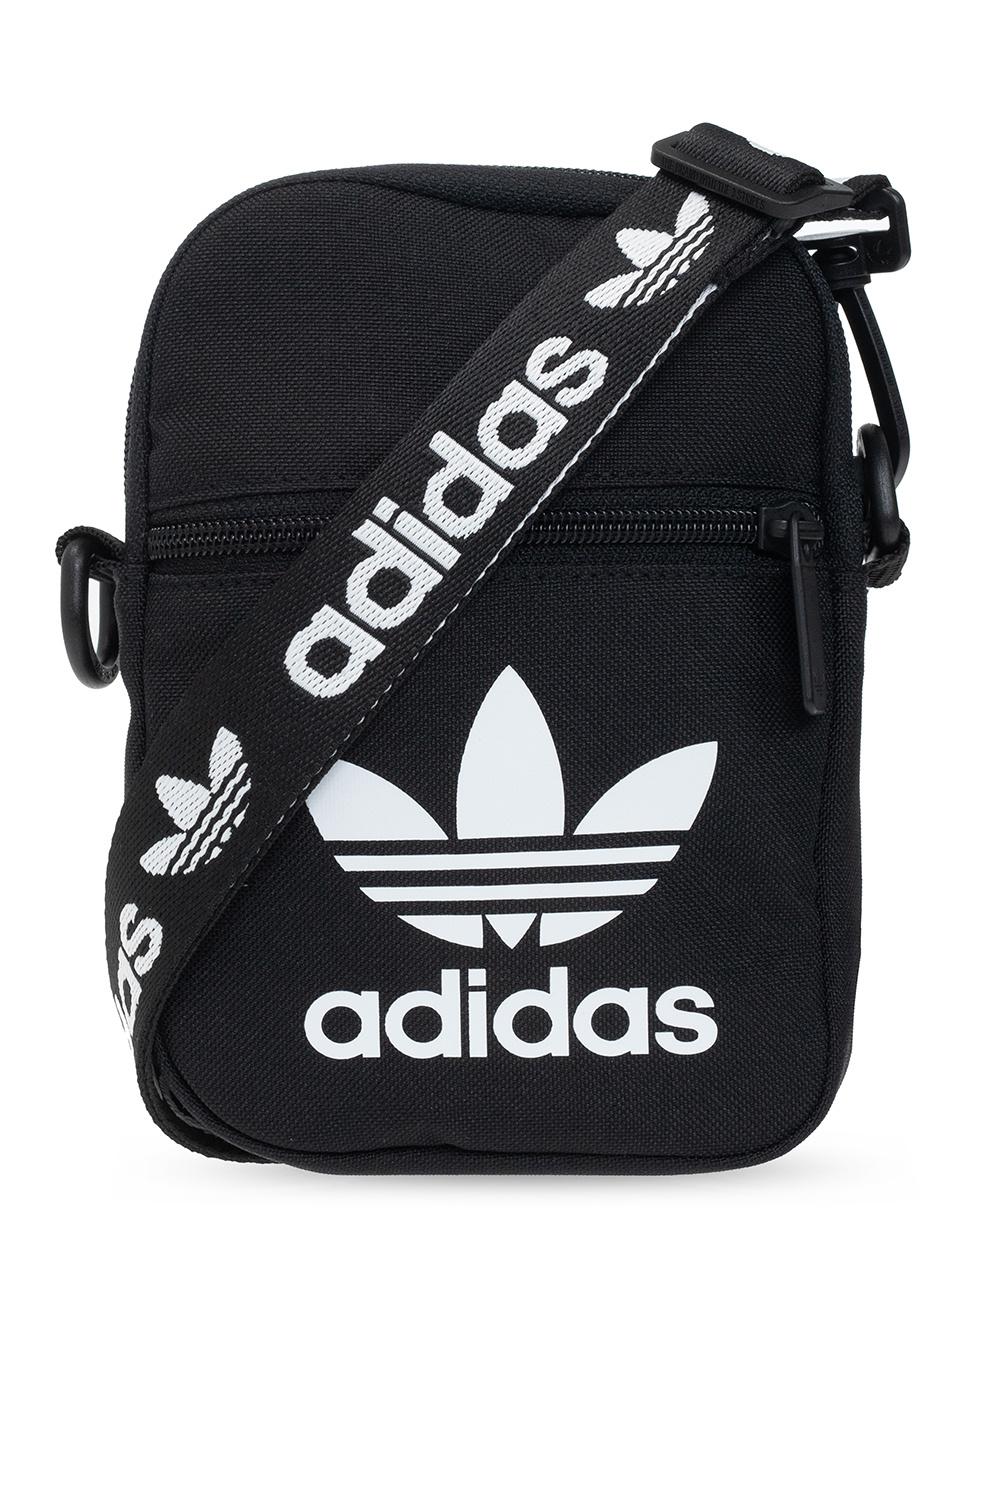 adidas Originals Shoulder Bag With Logo in Black - Lyst